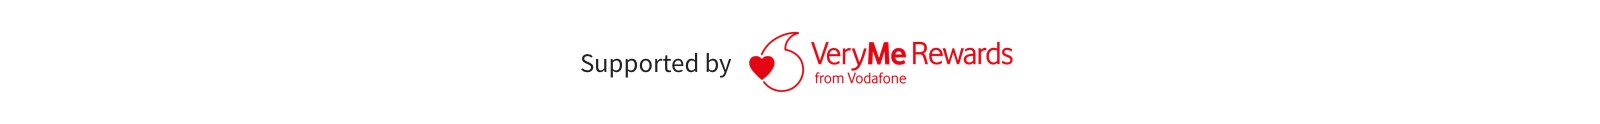 VeryMe Rewards from Vodafone